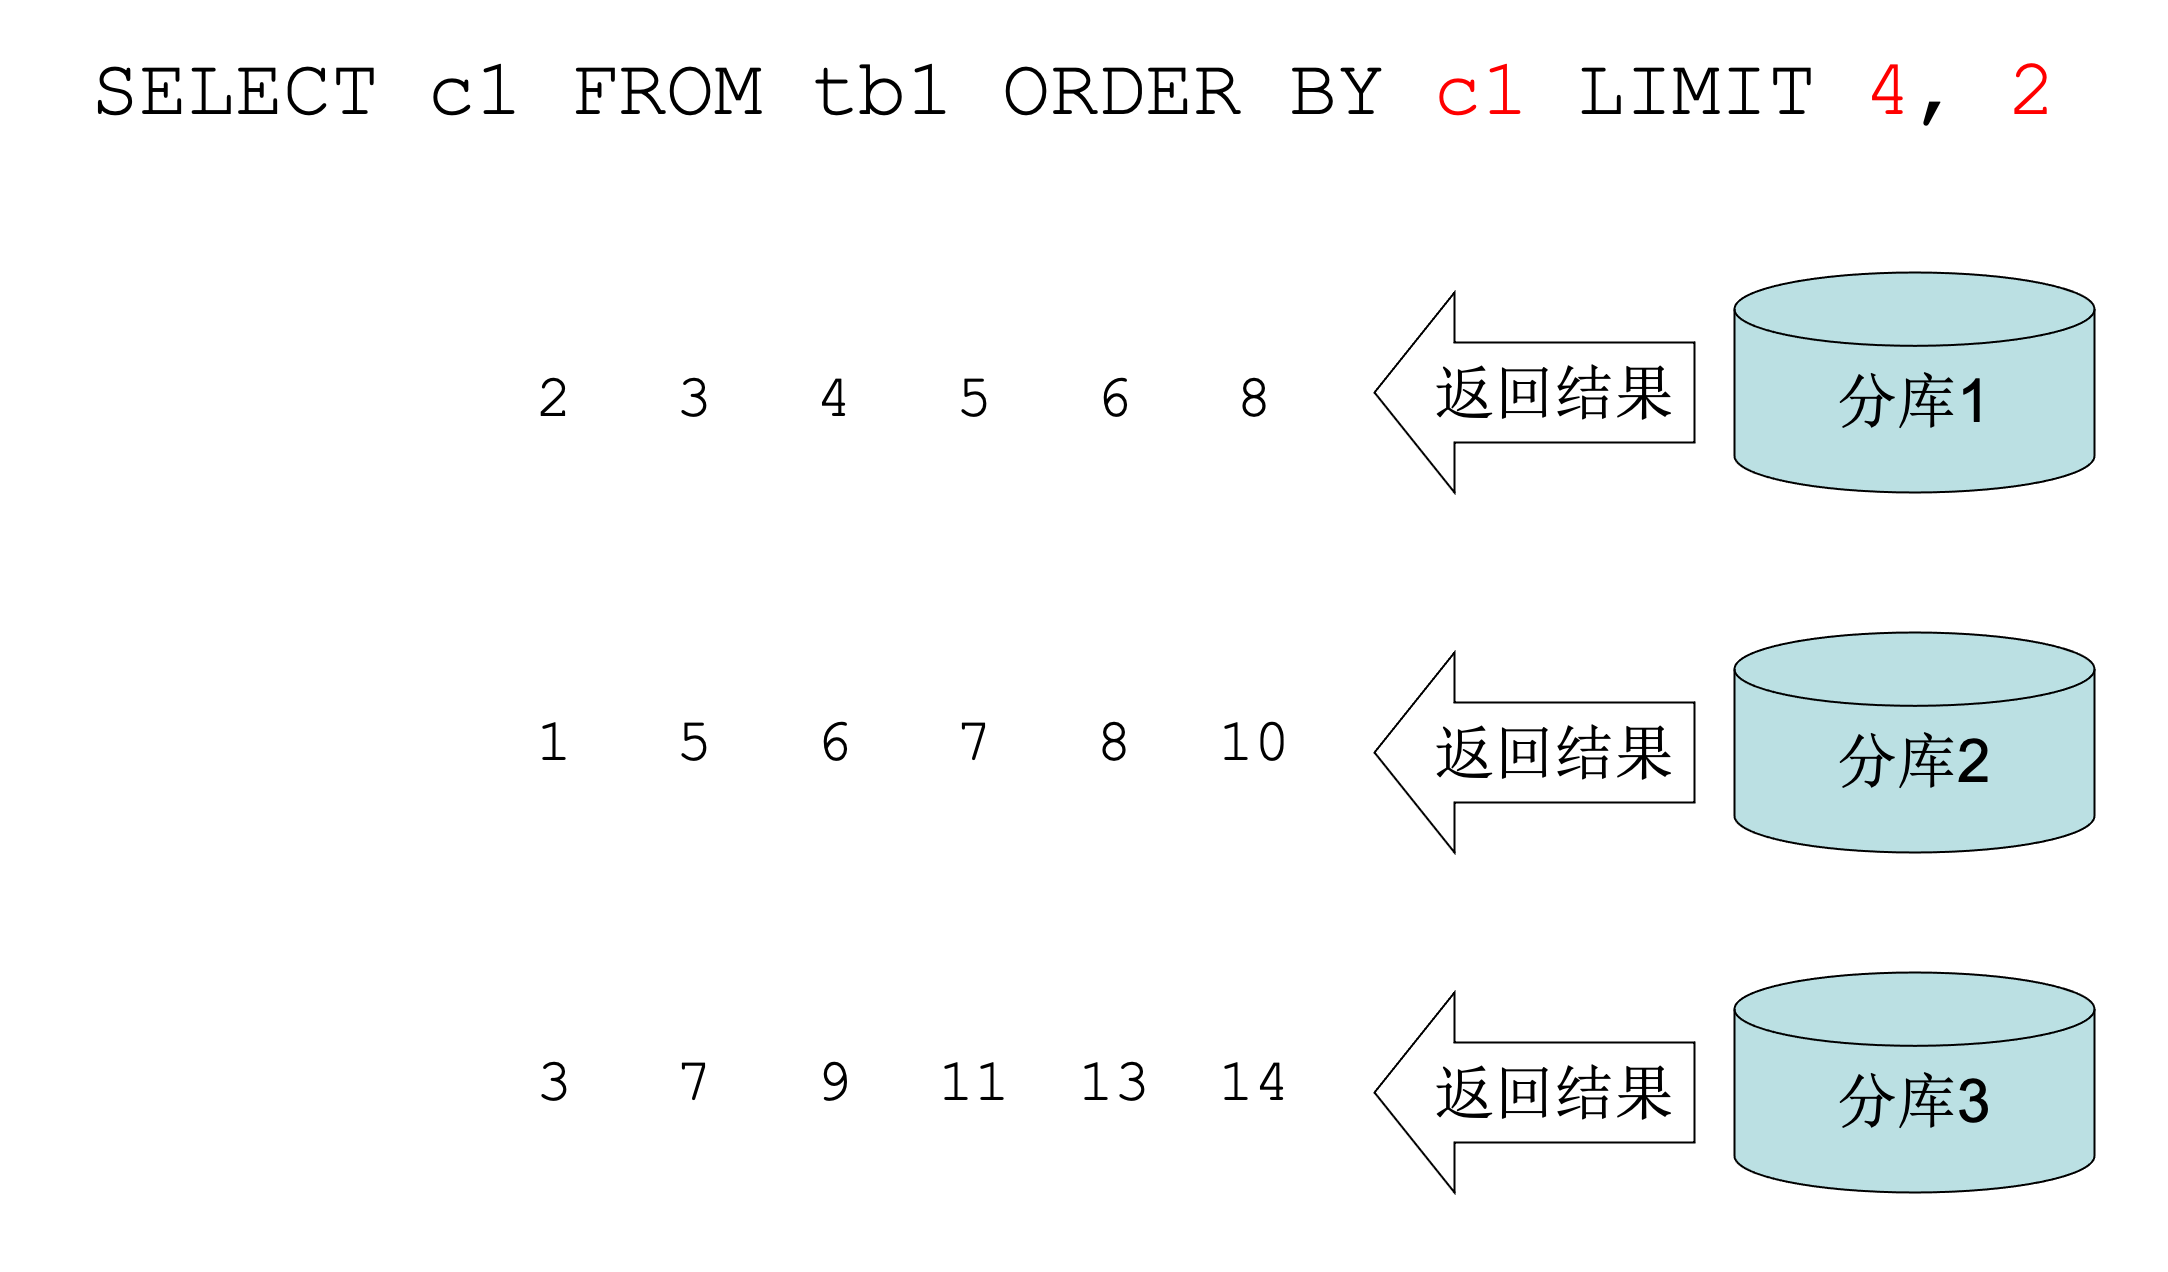 Cobar提出的一种在分库场景下对Order By / Limit 的优化